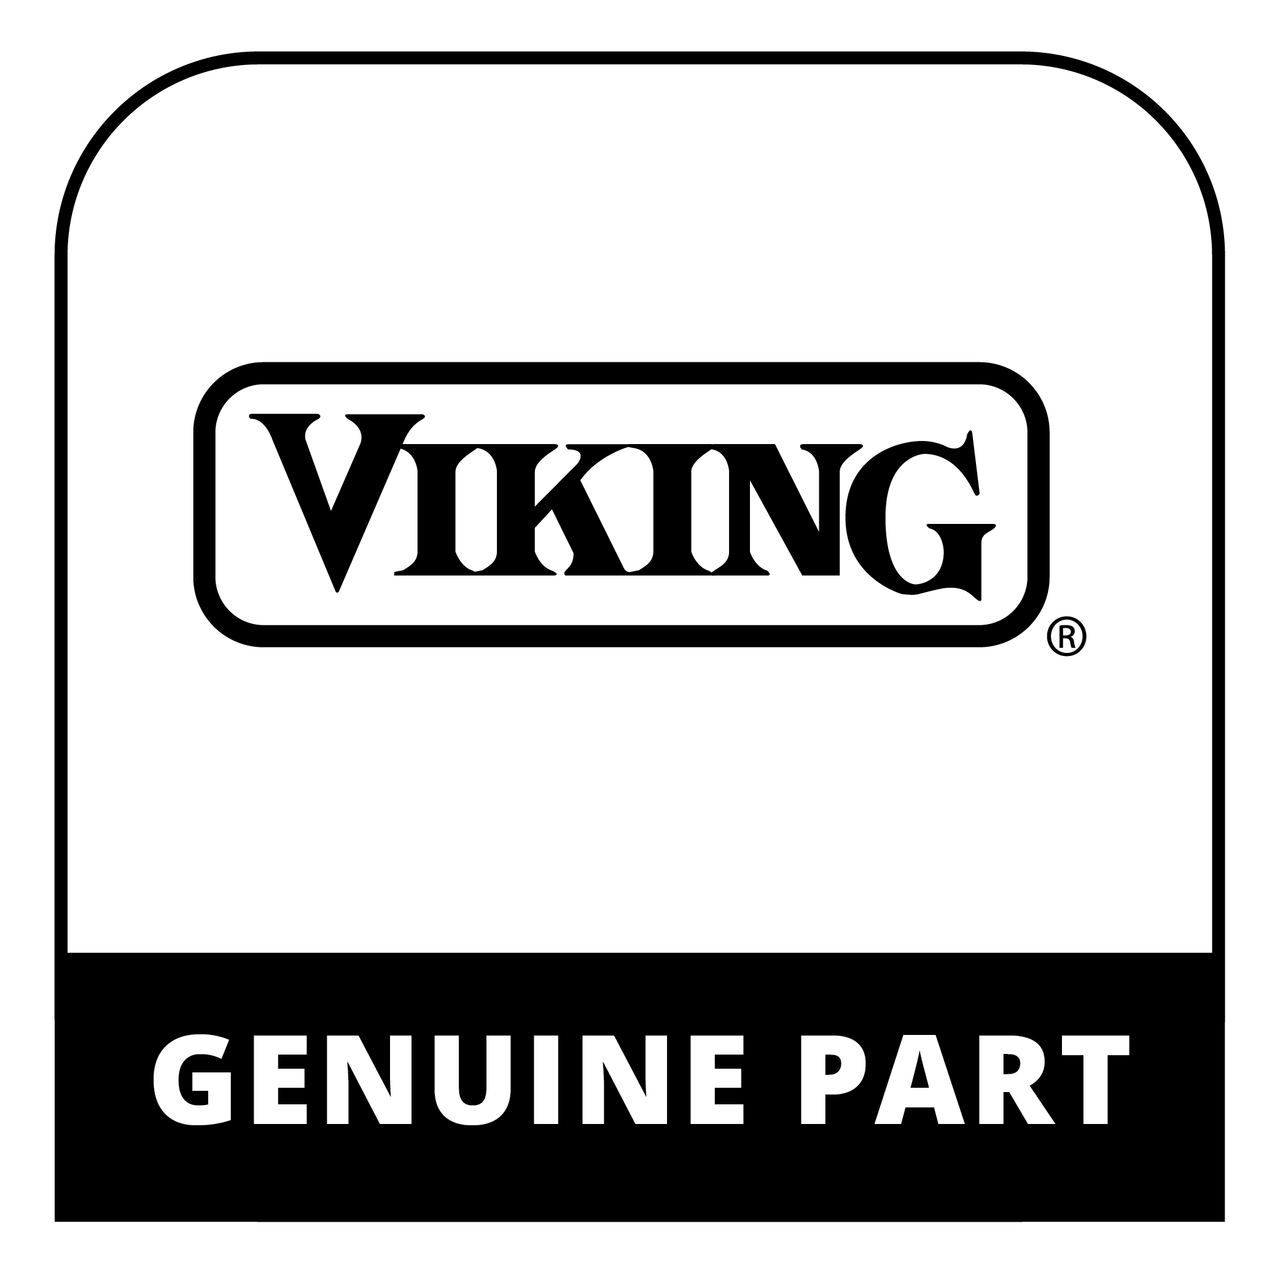 Viking PM110003 - DOOR FRAME ASSY, US VERSION - Genuine Viking Part